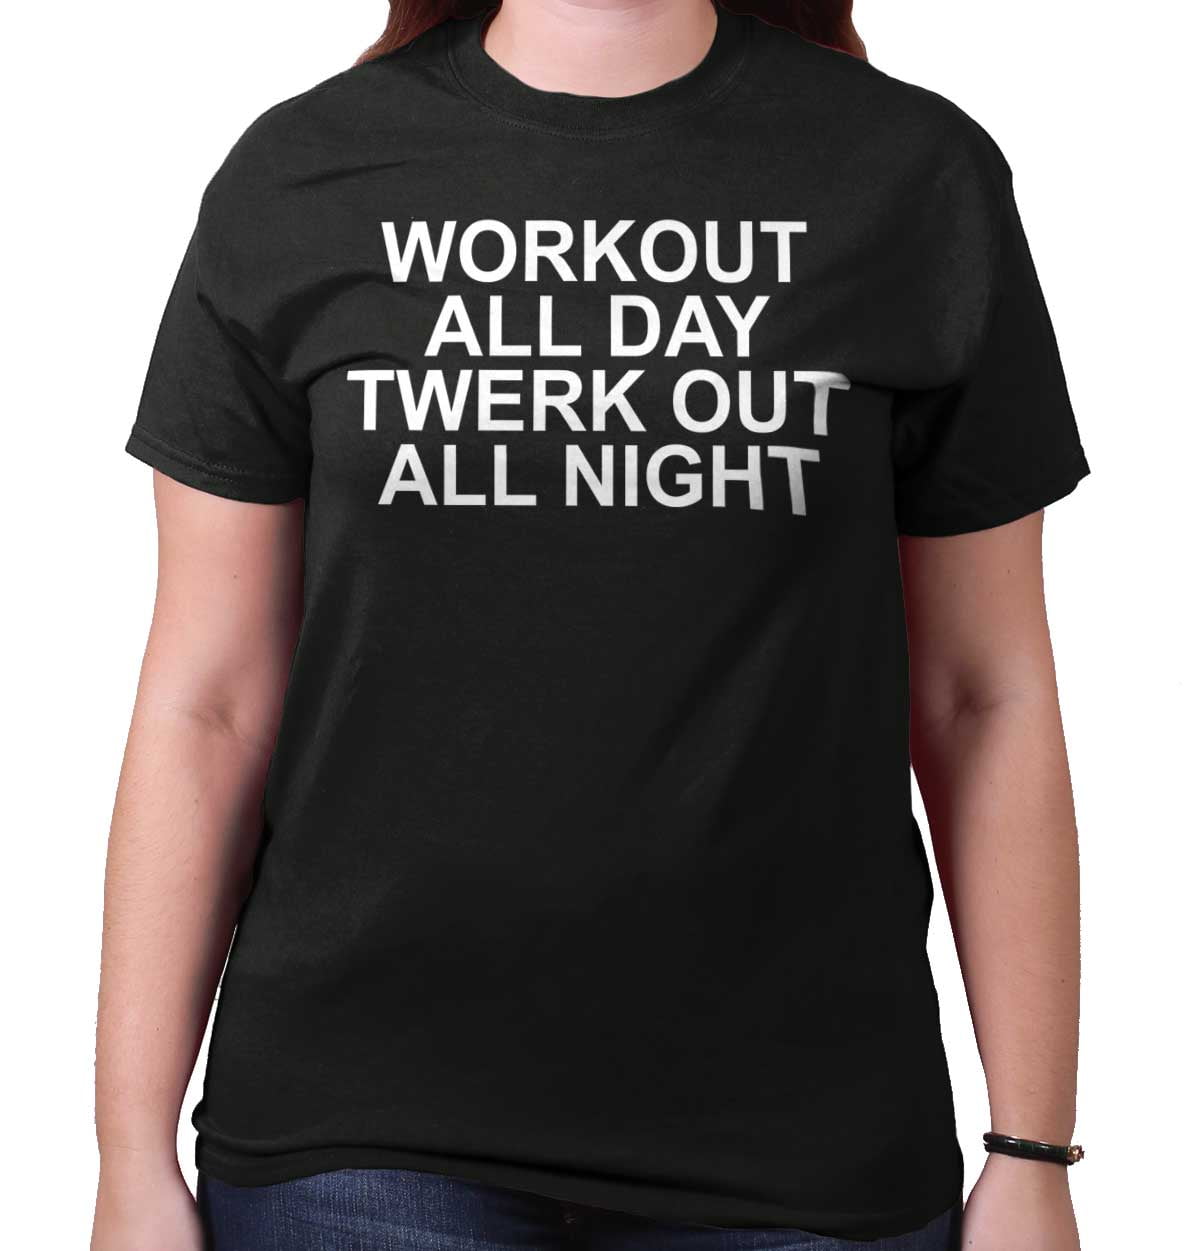 Lab insulator Saucer Gym Workout Twerk Shirt | Funny Training Party Dance Wild Yas T-Shirt Tee -  Walmart.com